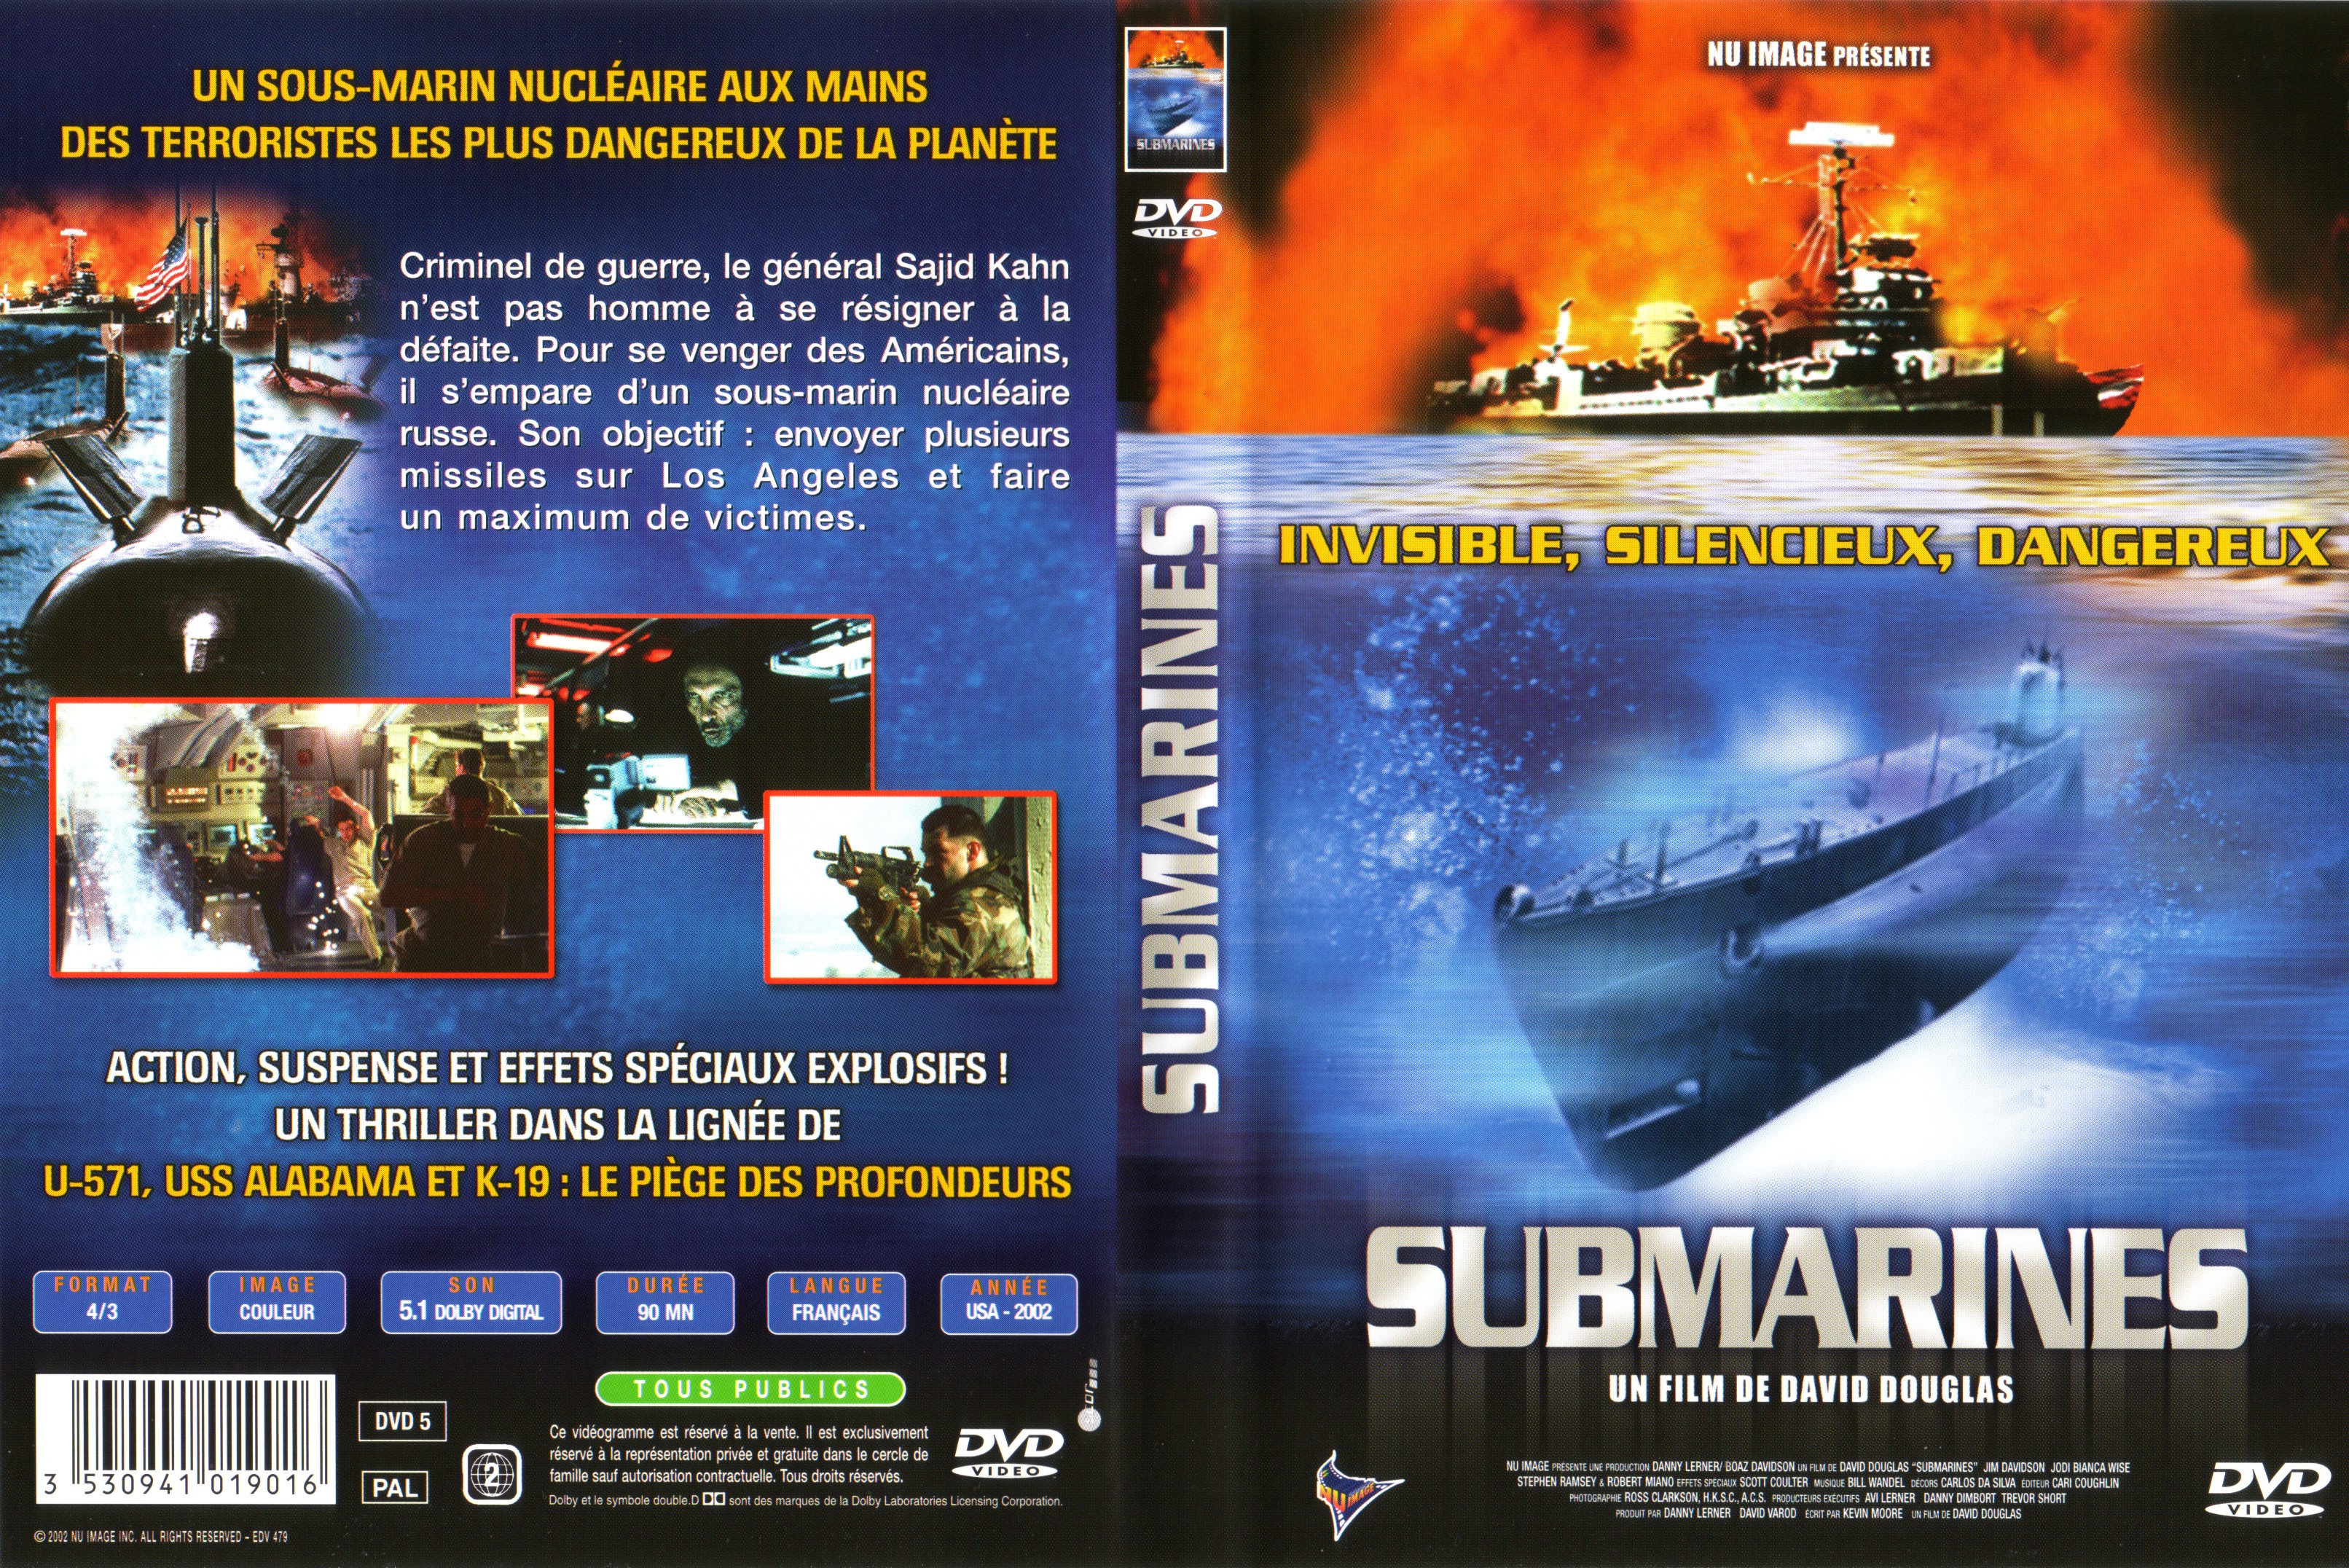 Jaquette DVD Submarines v2